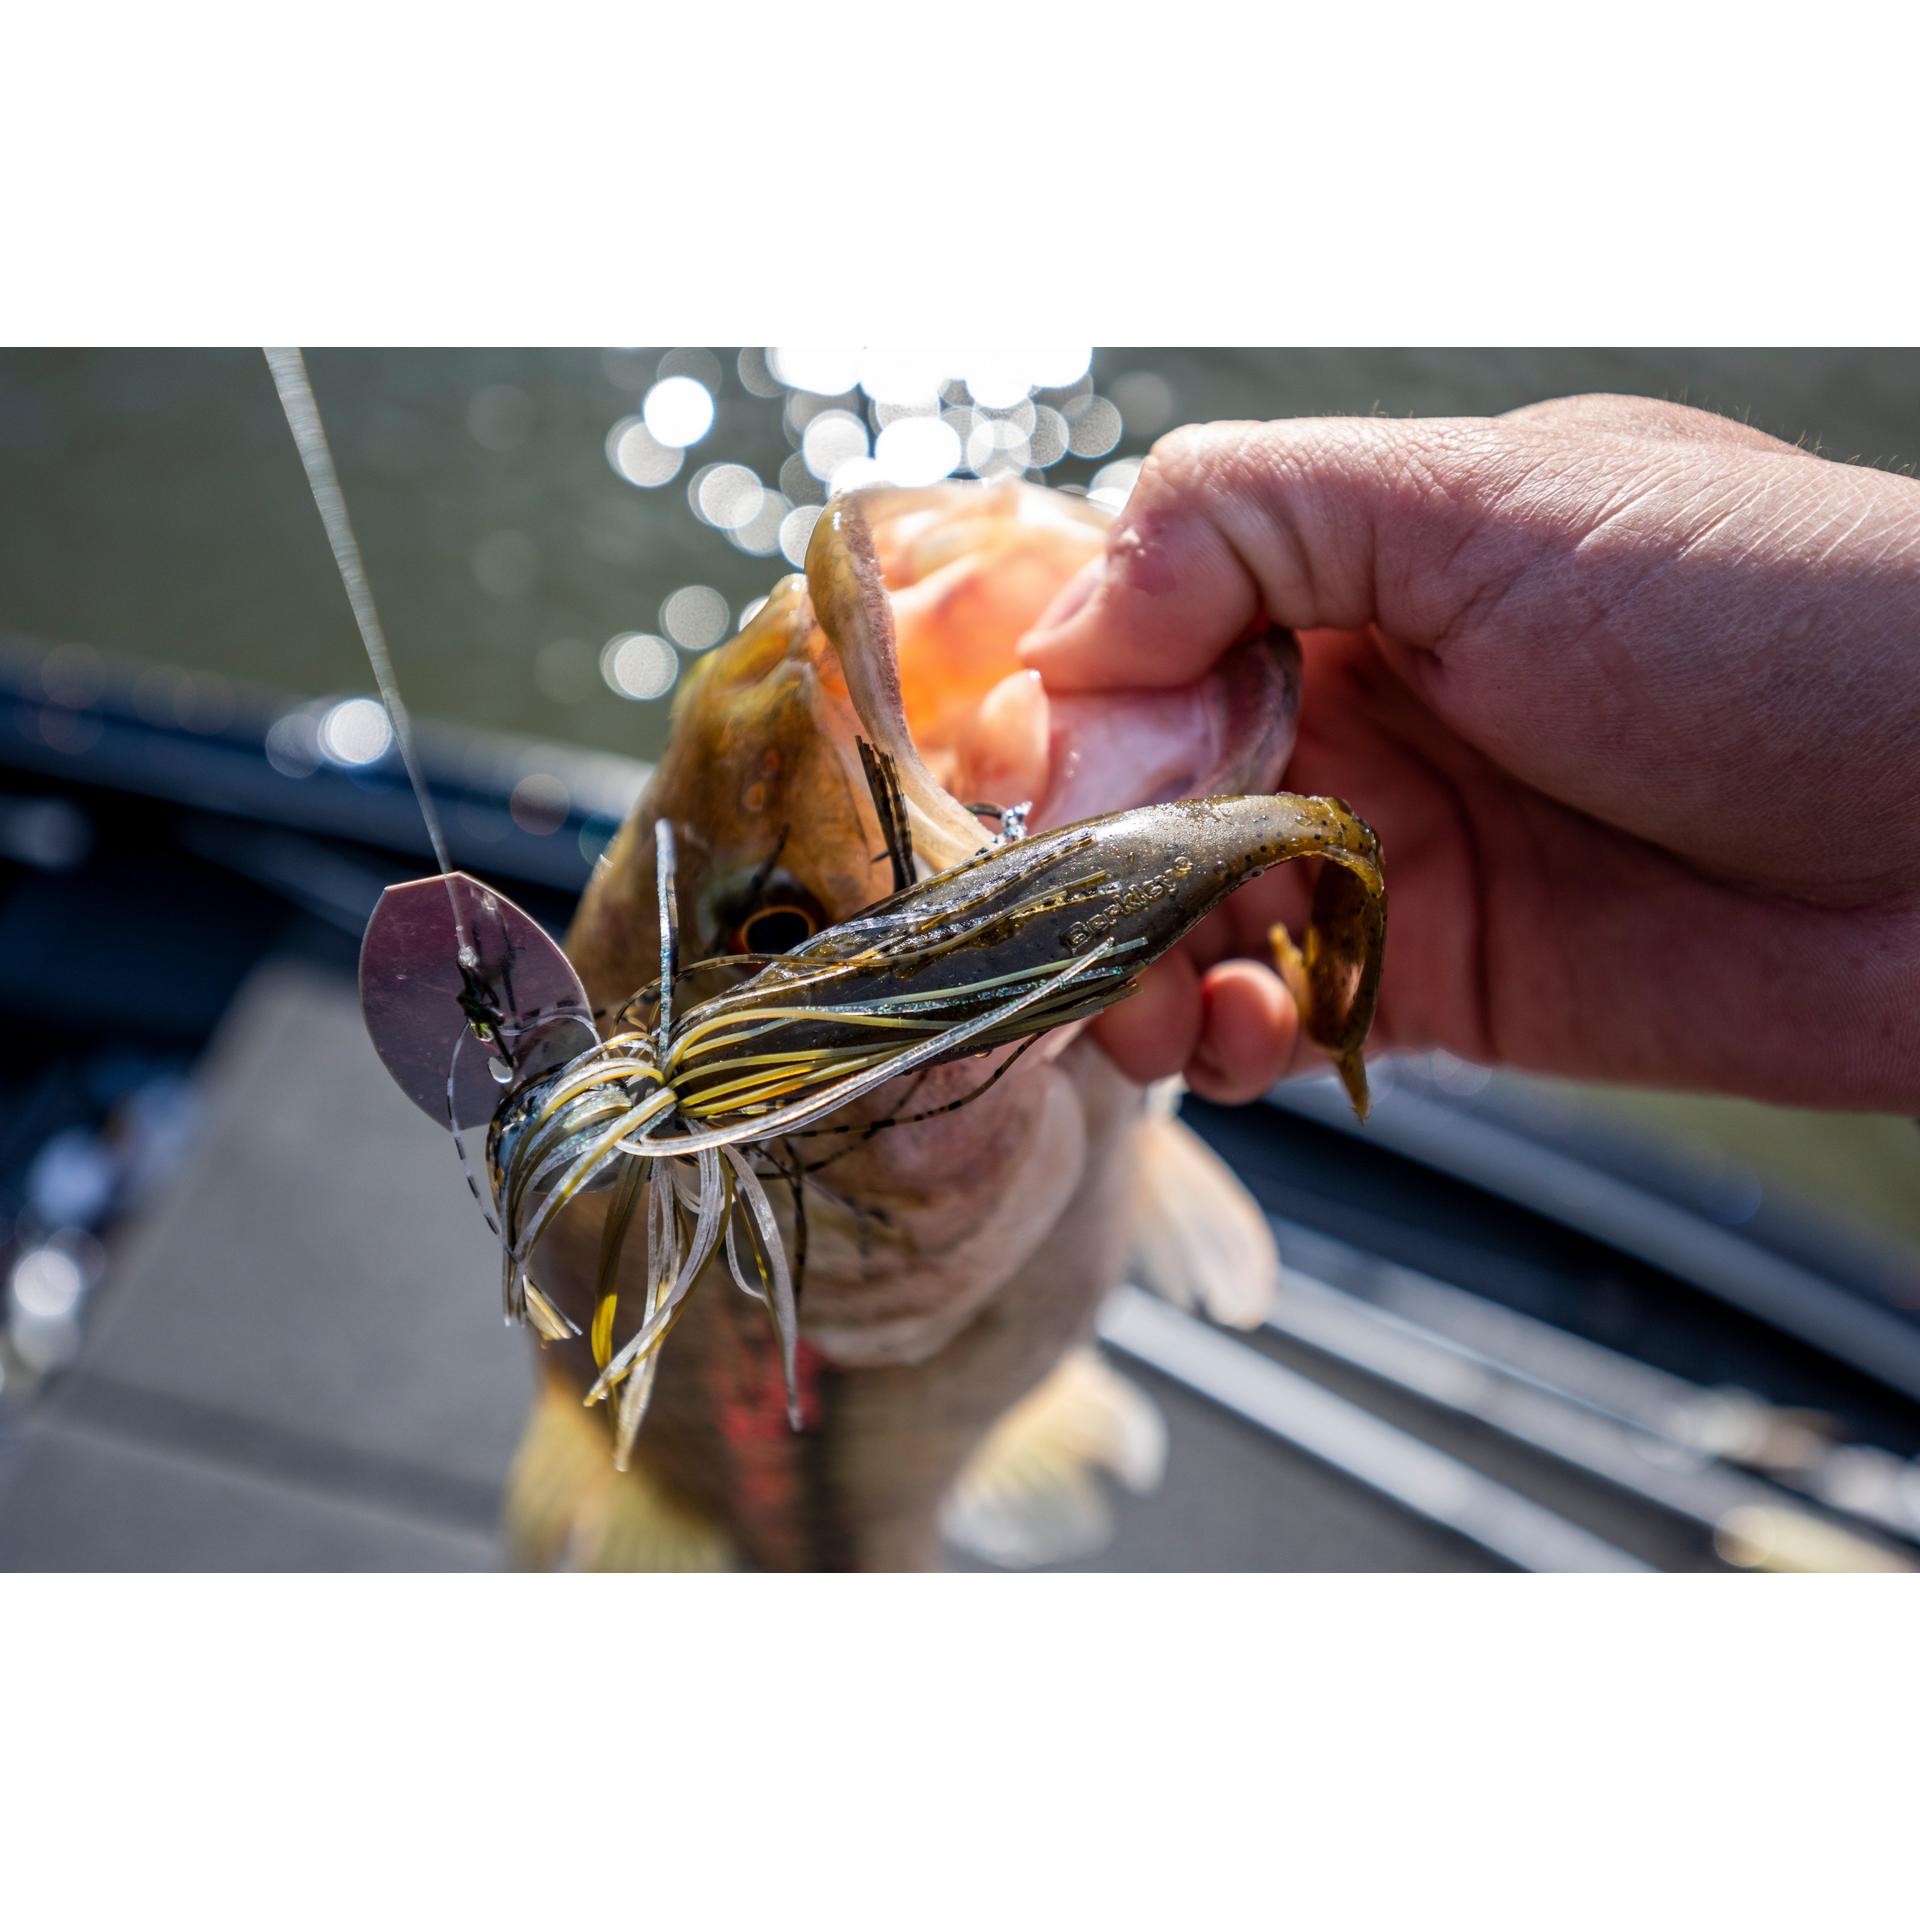 BERKLEY SOFT BAIT POWERBAIT THE DEAL LIFESTLYE 2019 005 | Berkley Fishing